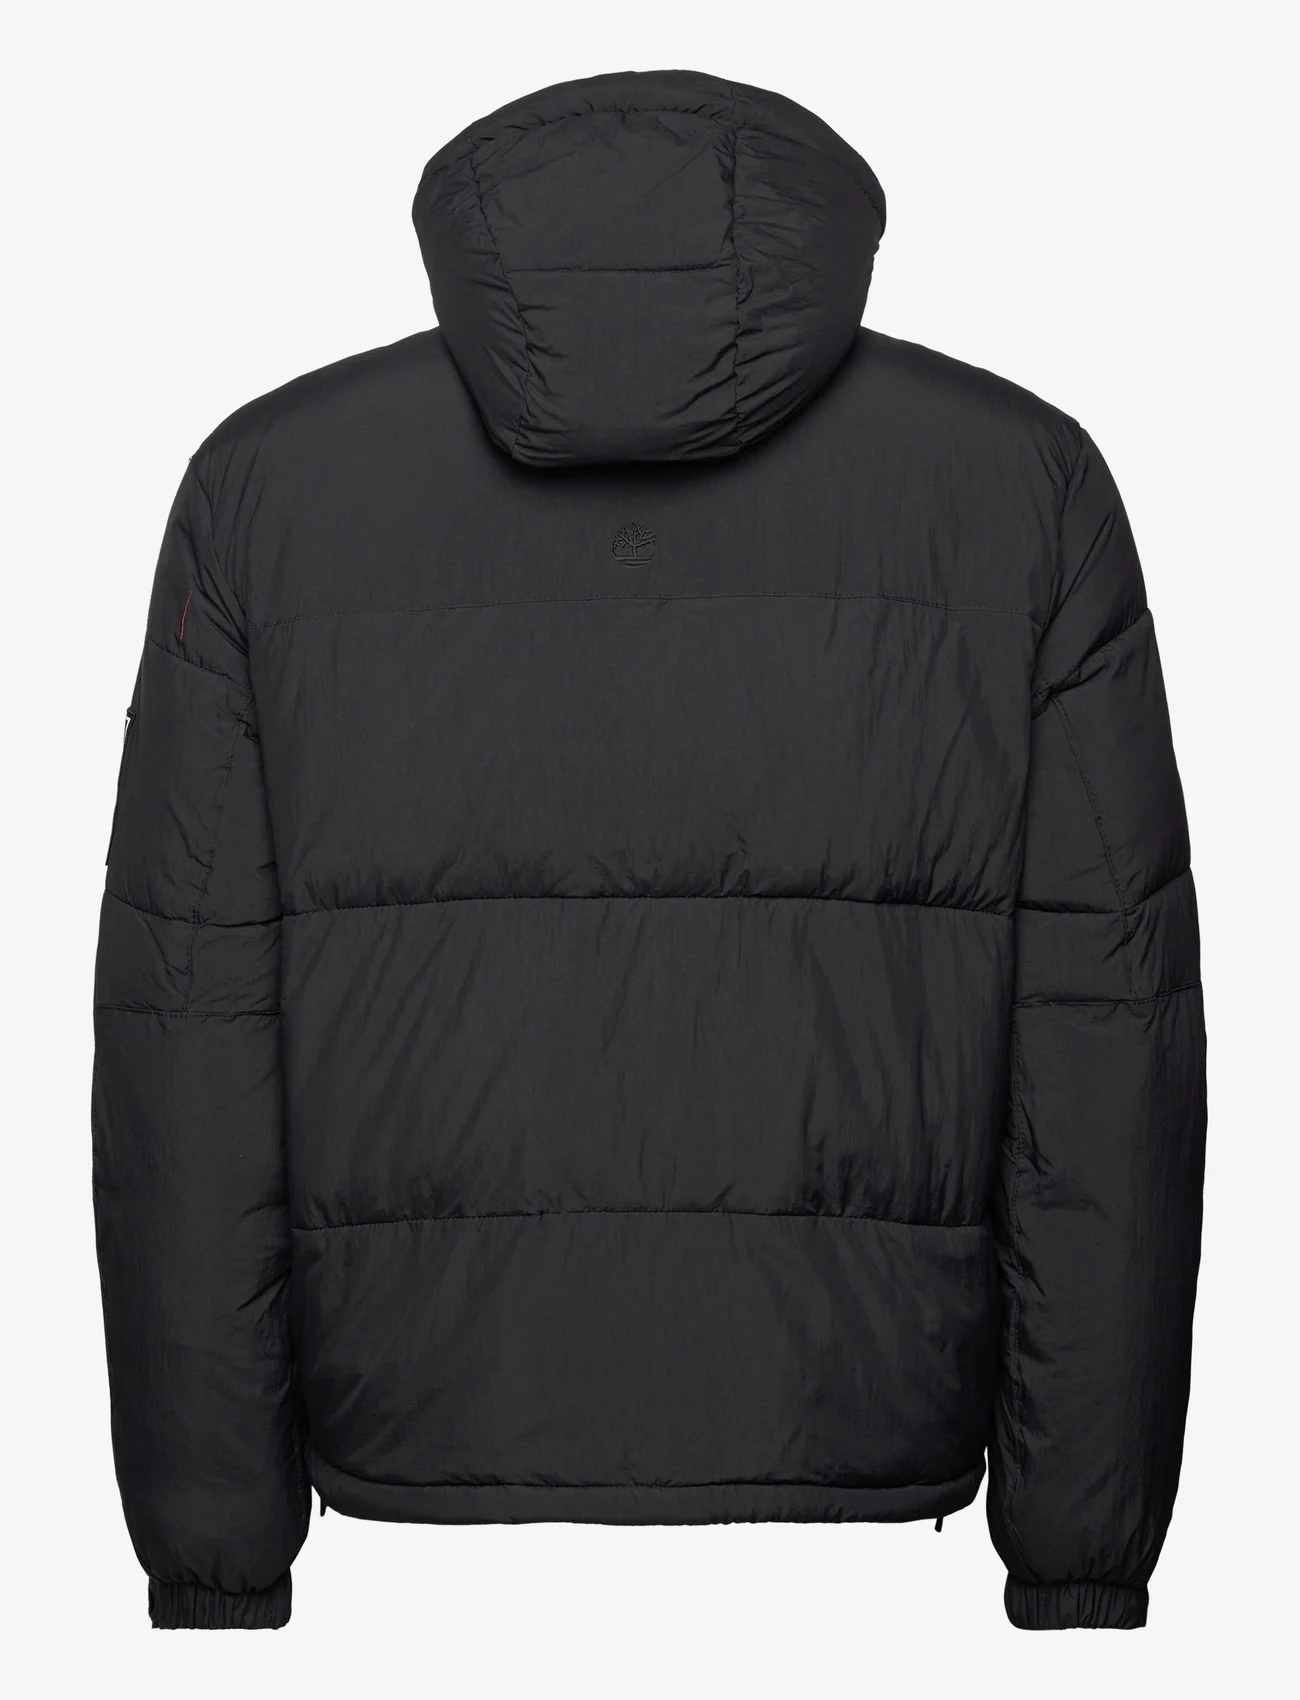 Timberland - DWR Outdoor Archive Puffer Jacket - winterjassen - black - 1